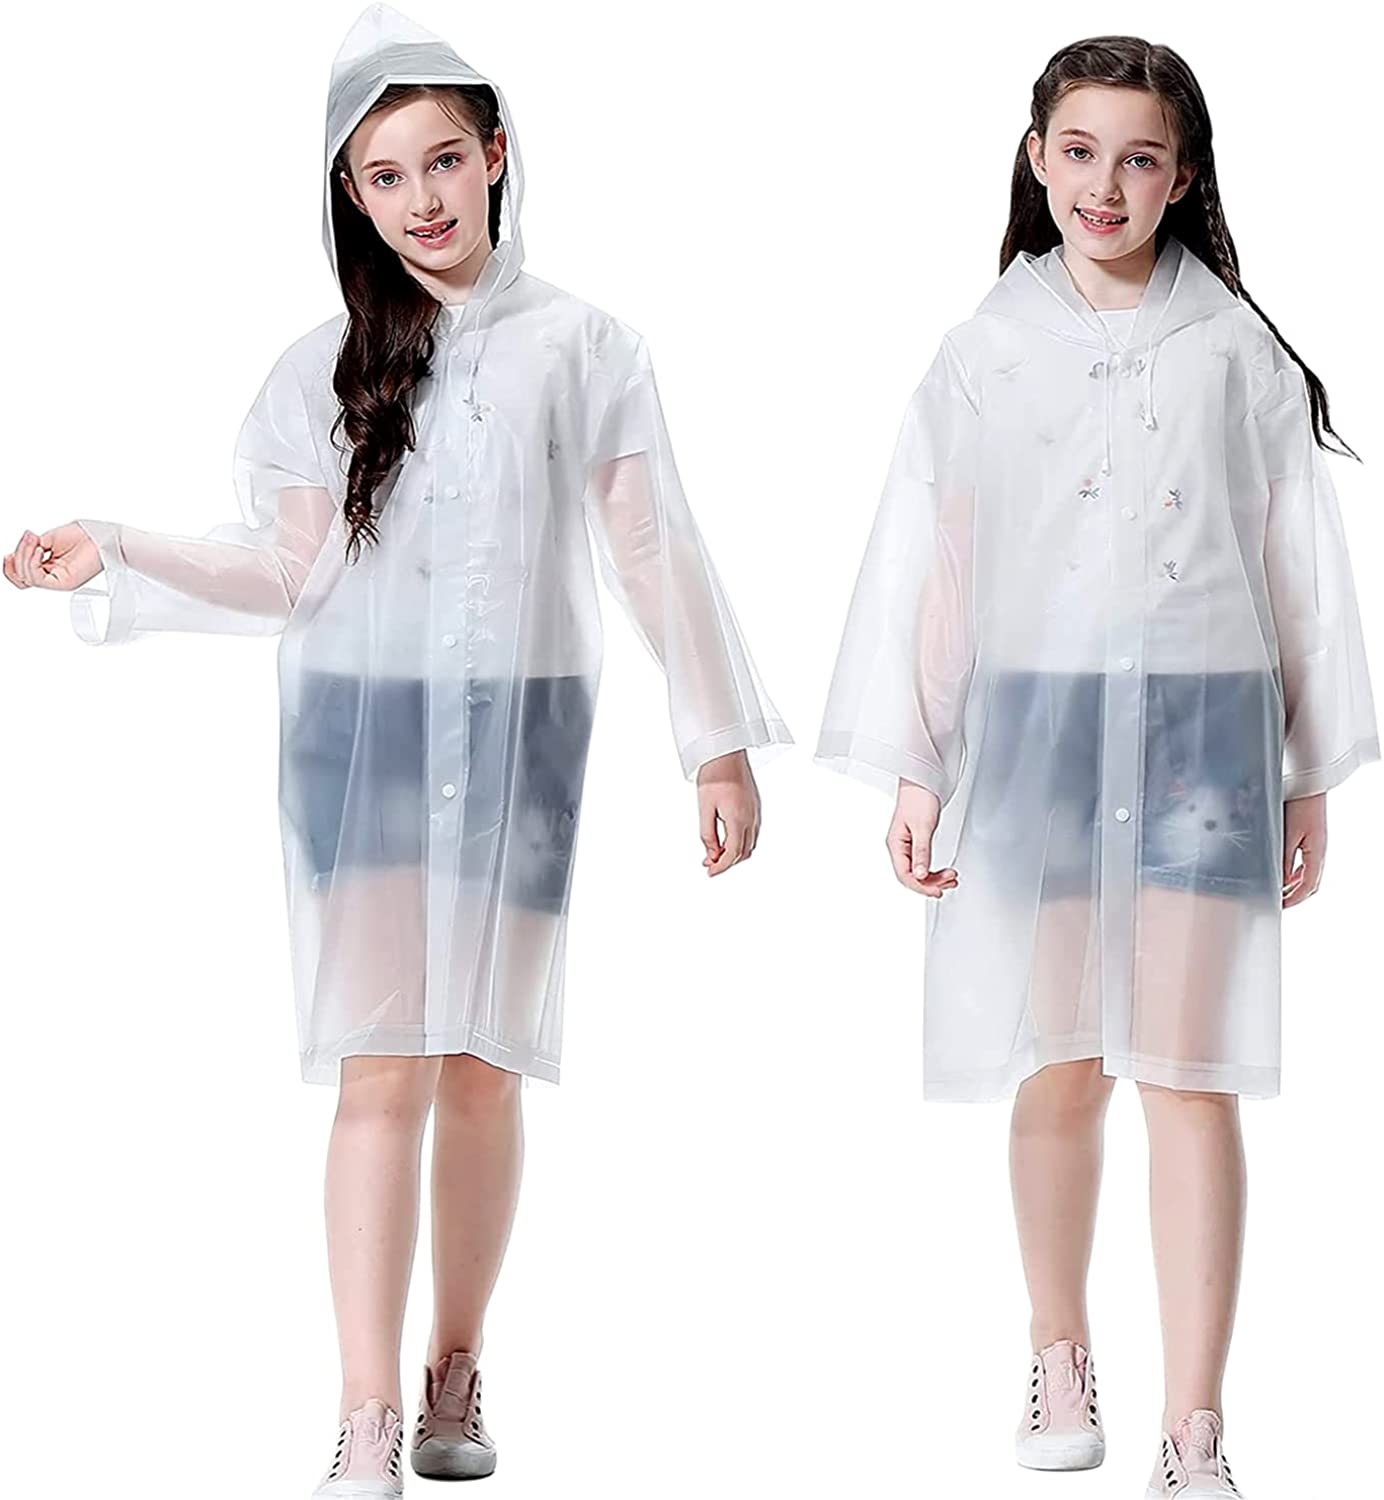 Rain Ponchos for Kids, 2 Pack Raincoats for Boys Girls with Hoods, EVA Waterproof Rain Jackets for Emergency, Disney World, Travel